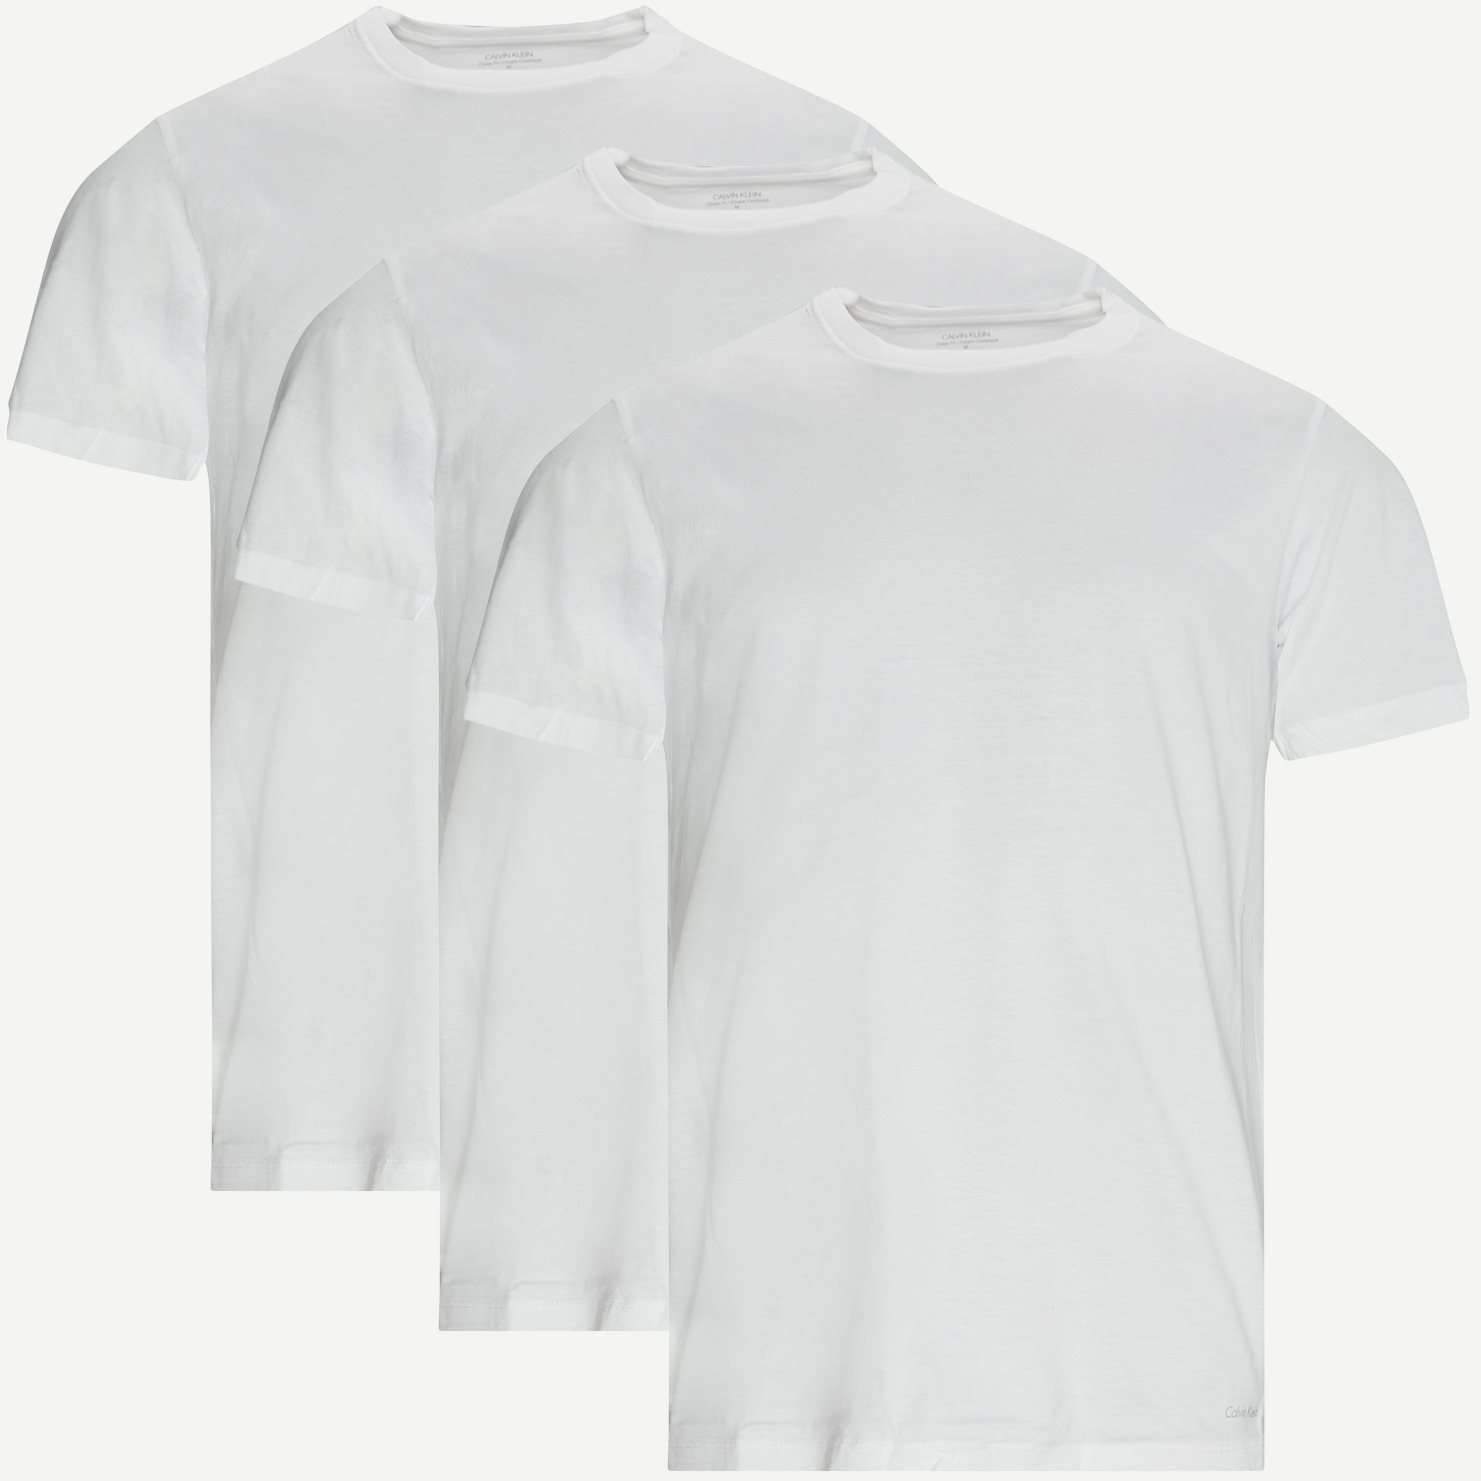 3er-Pack Rundhals-T-Shirts - T-Shirts - Classic fit - Weiß